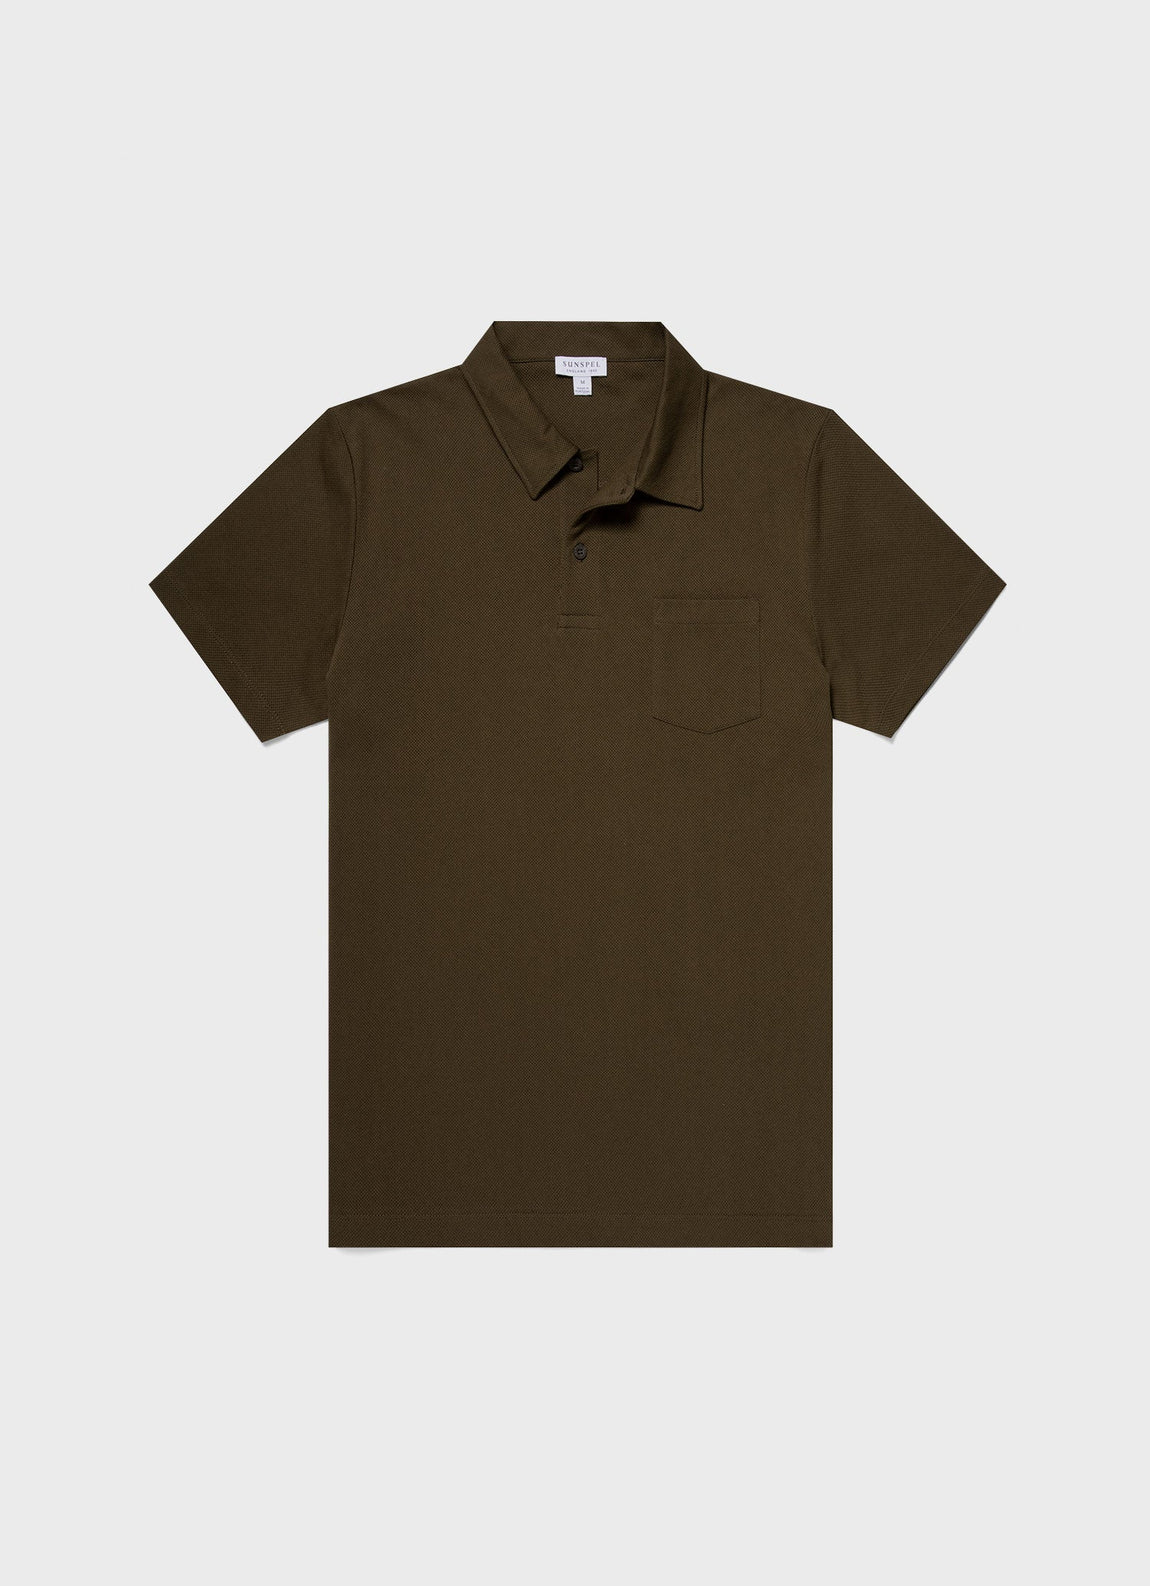 Men's Riviera Polo Shirt in Dark Olive